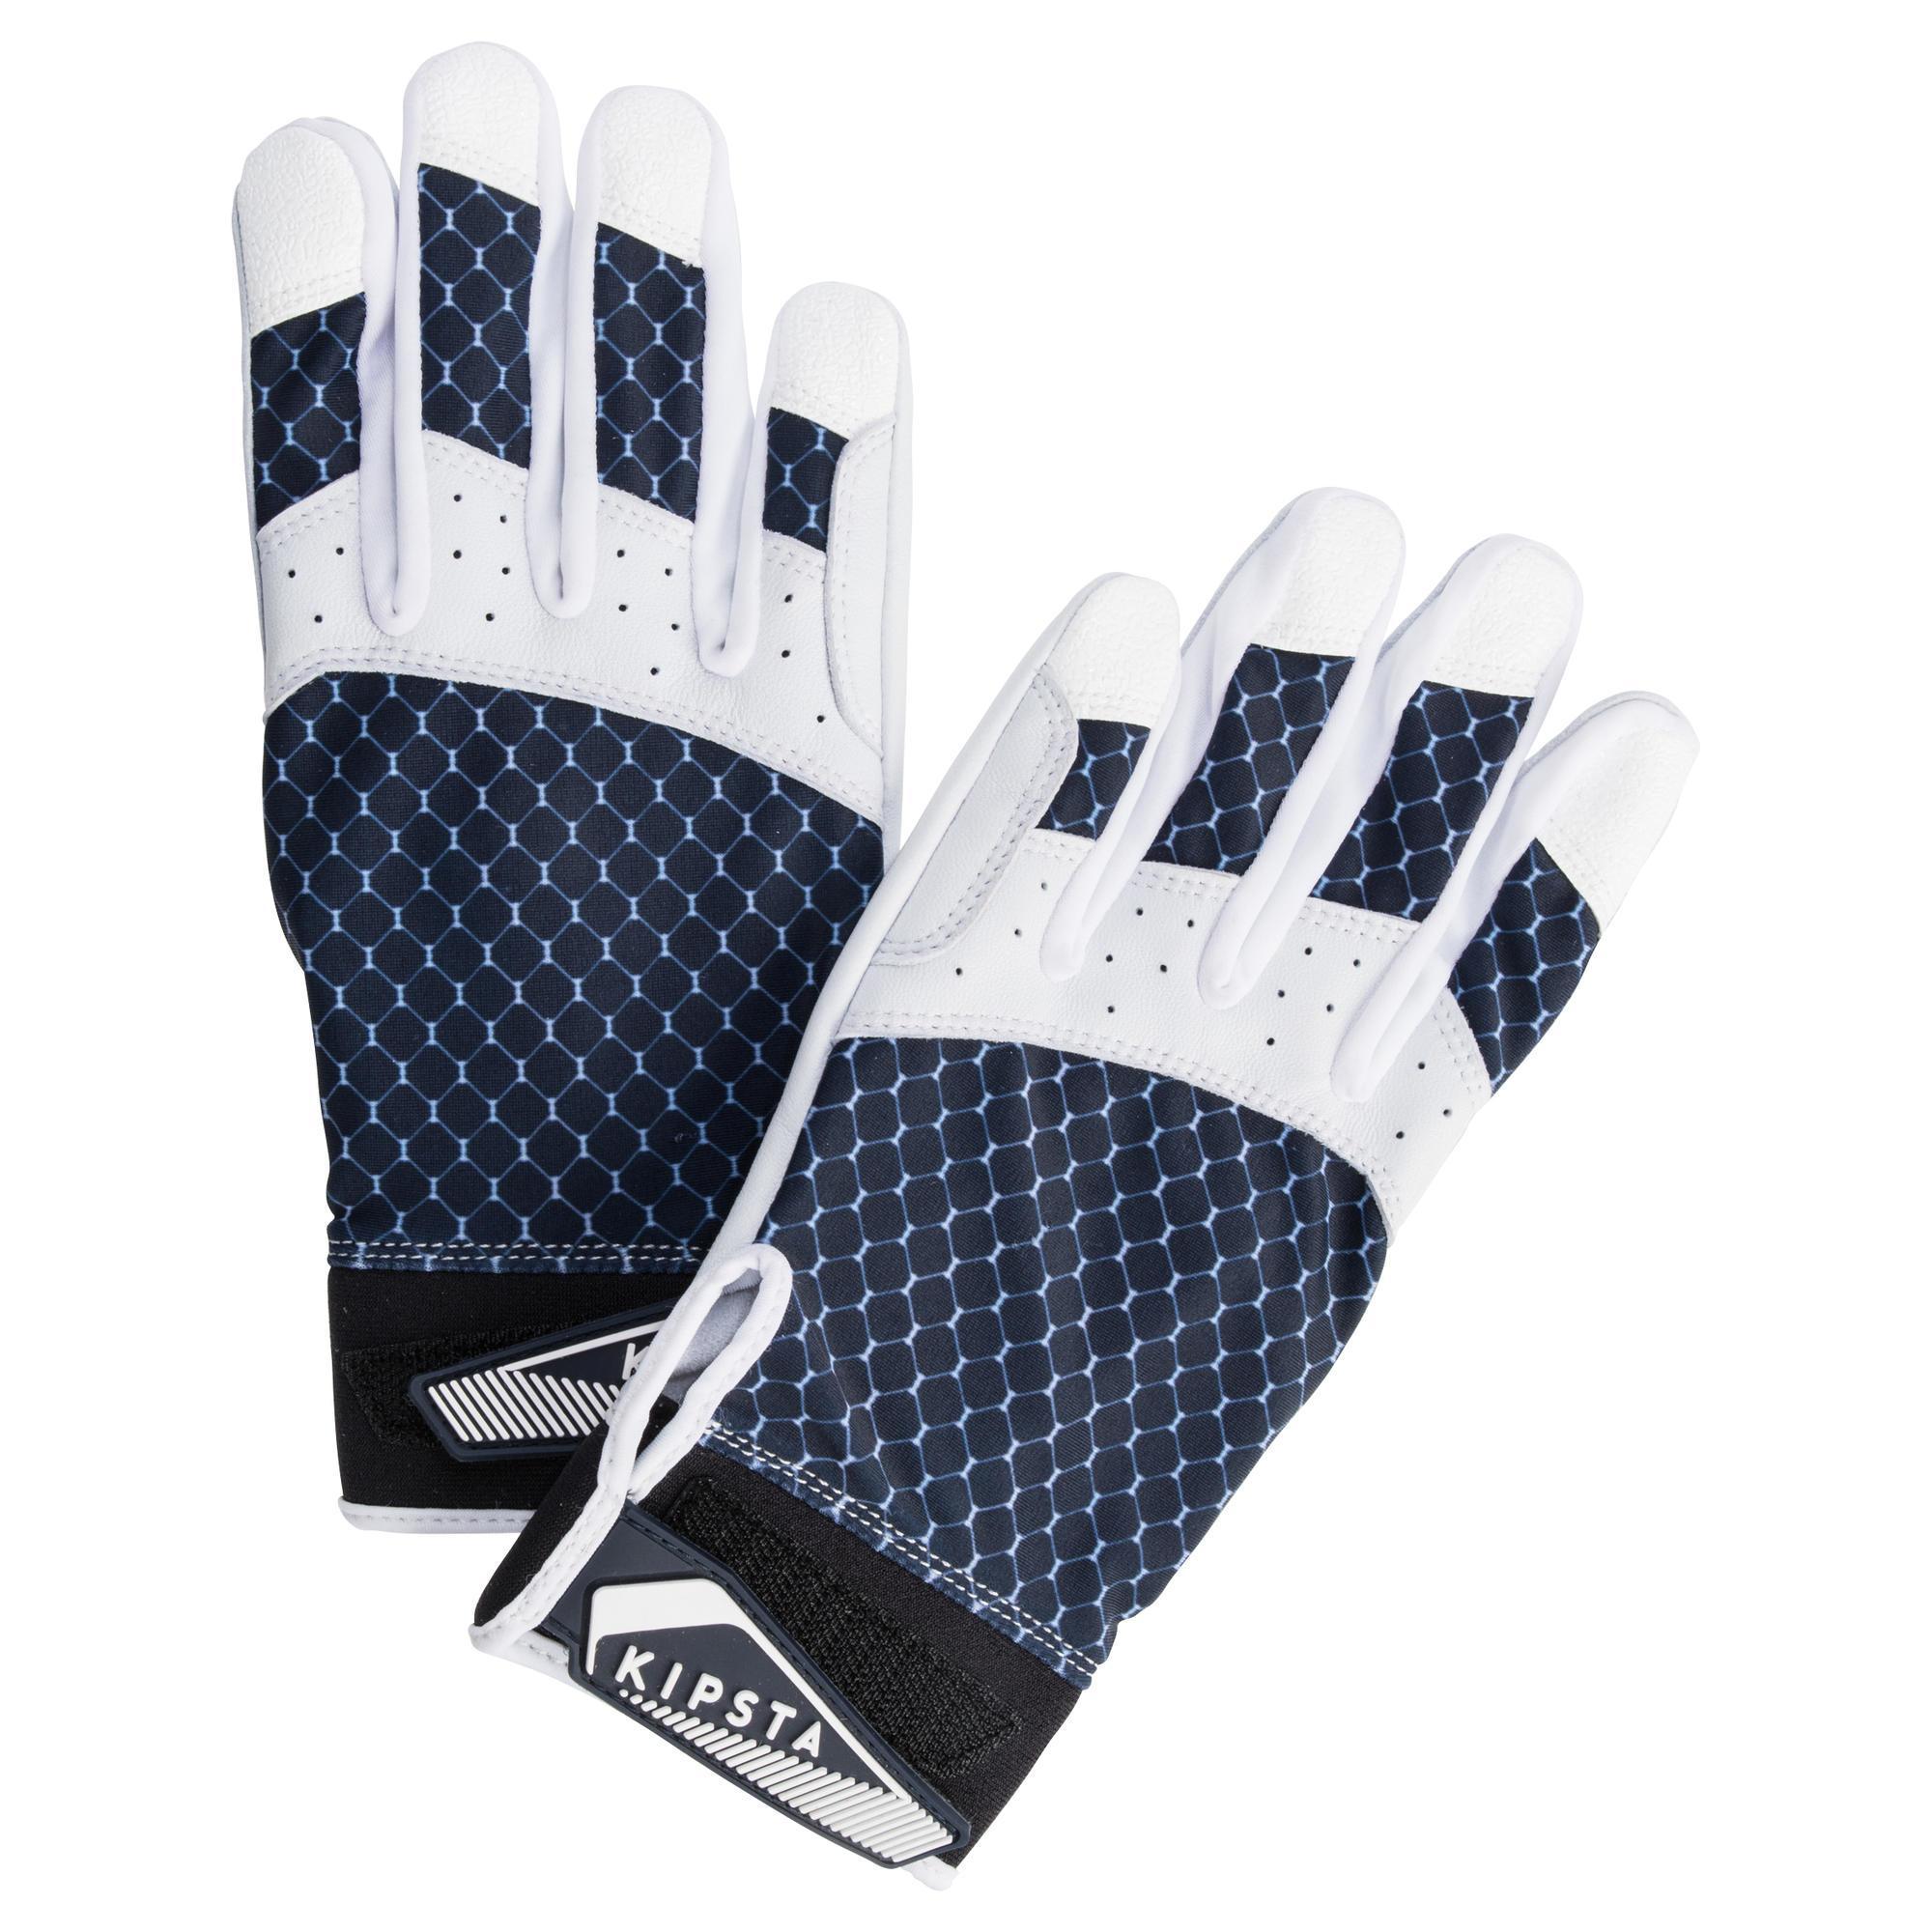 decathlon batting gloves